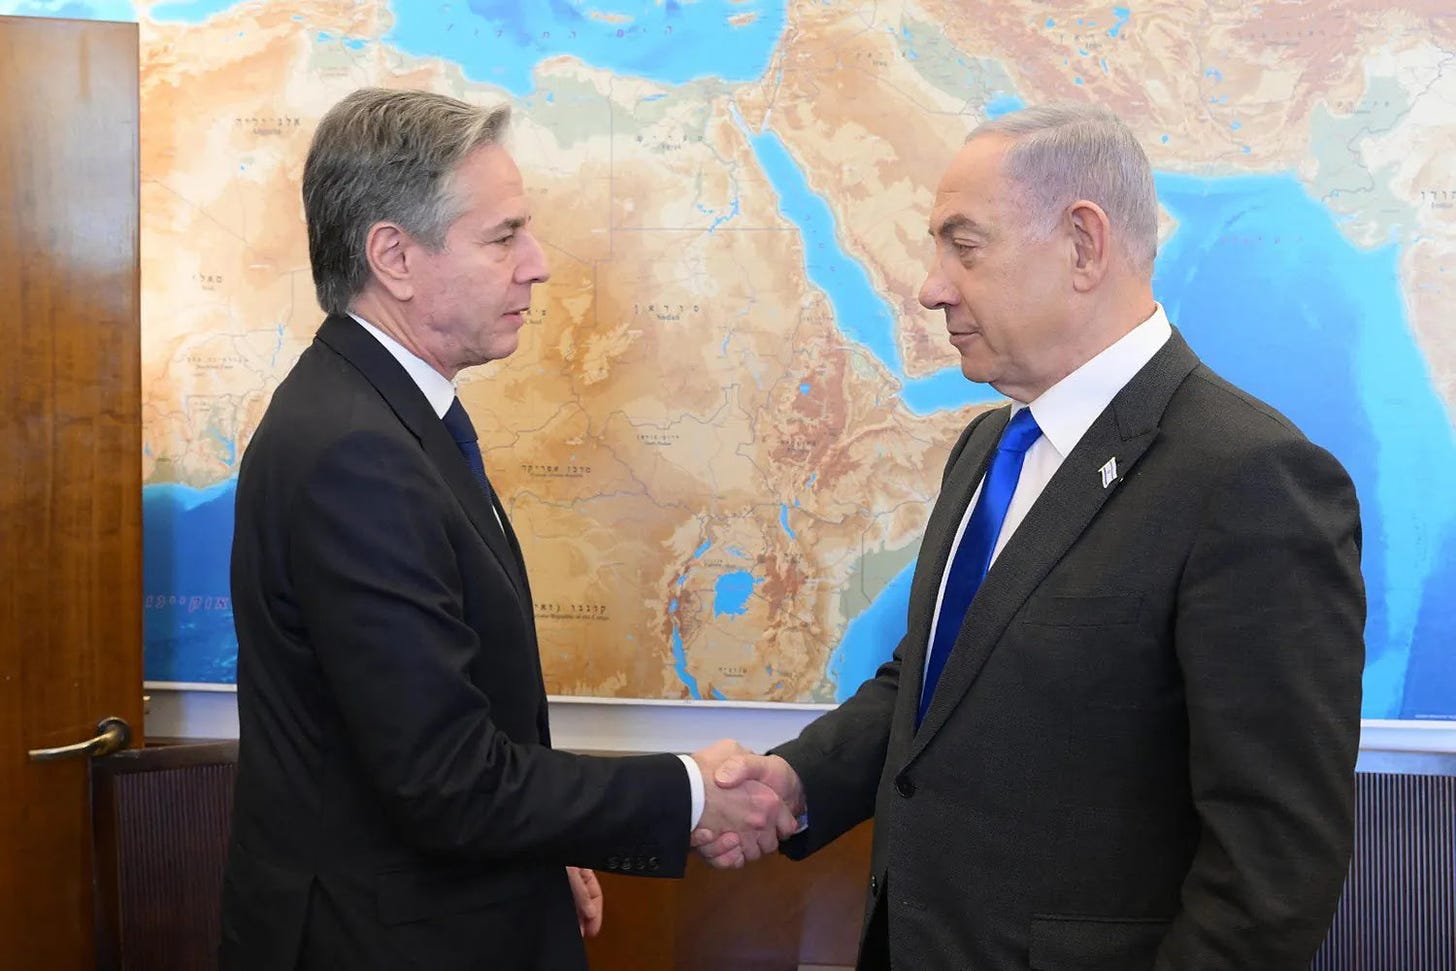 U.S. Secretary of State Antony Blinken shakes hands with Israeli Prime Minister Benjamin Netanyahu.